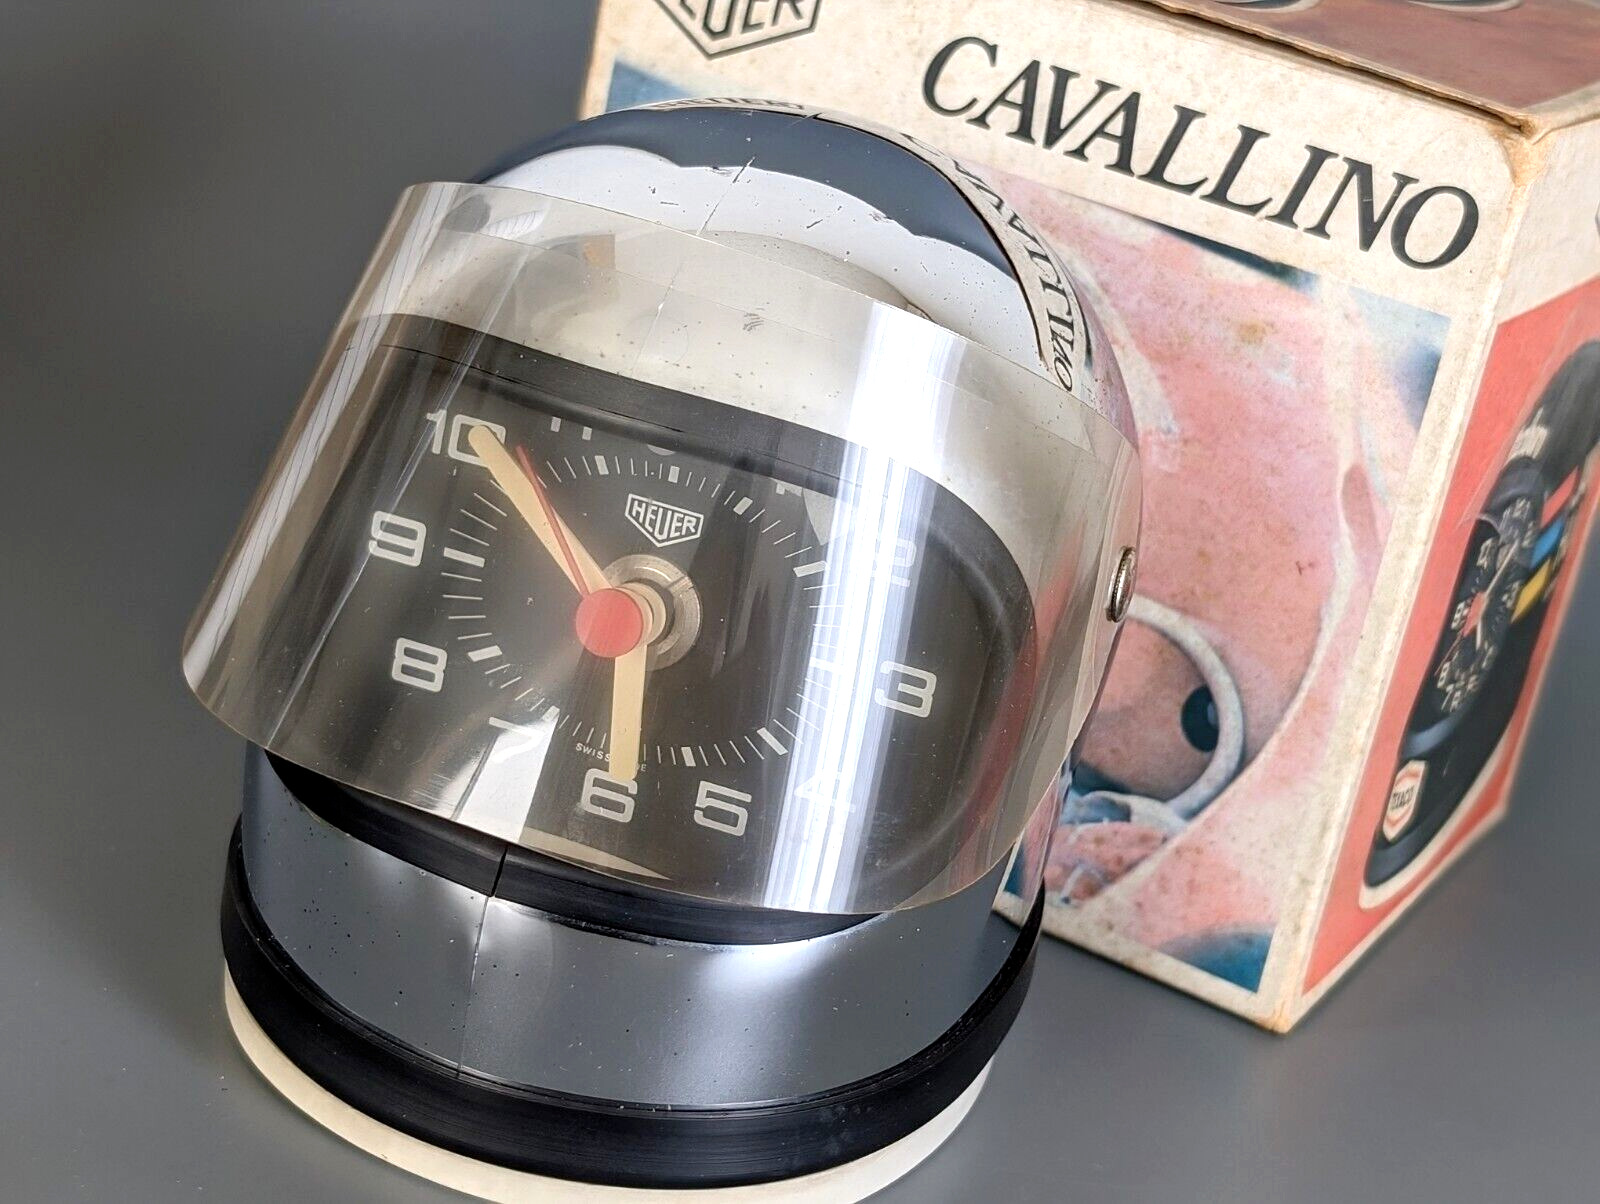 Rare Vintage Heuer Cavallino Helmet Desk Clock Racing Quartz w/box